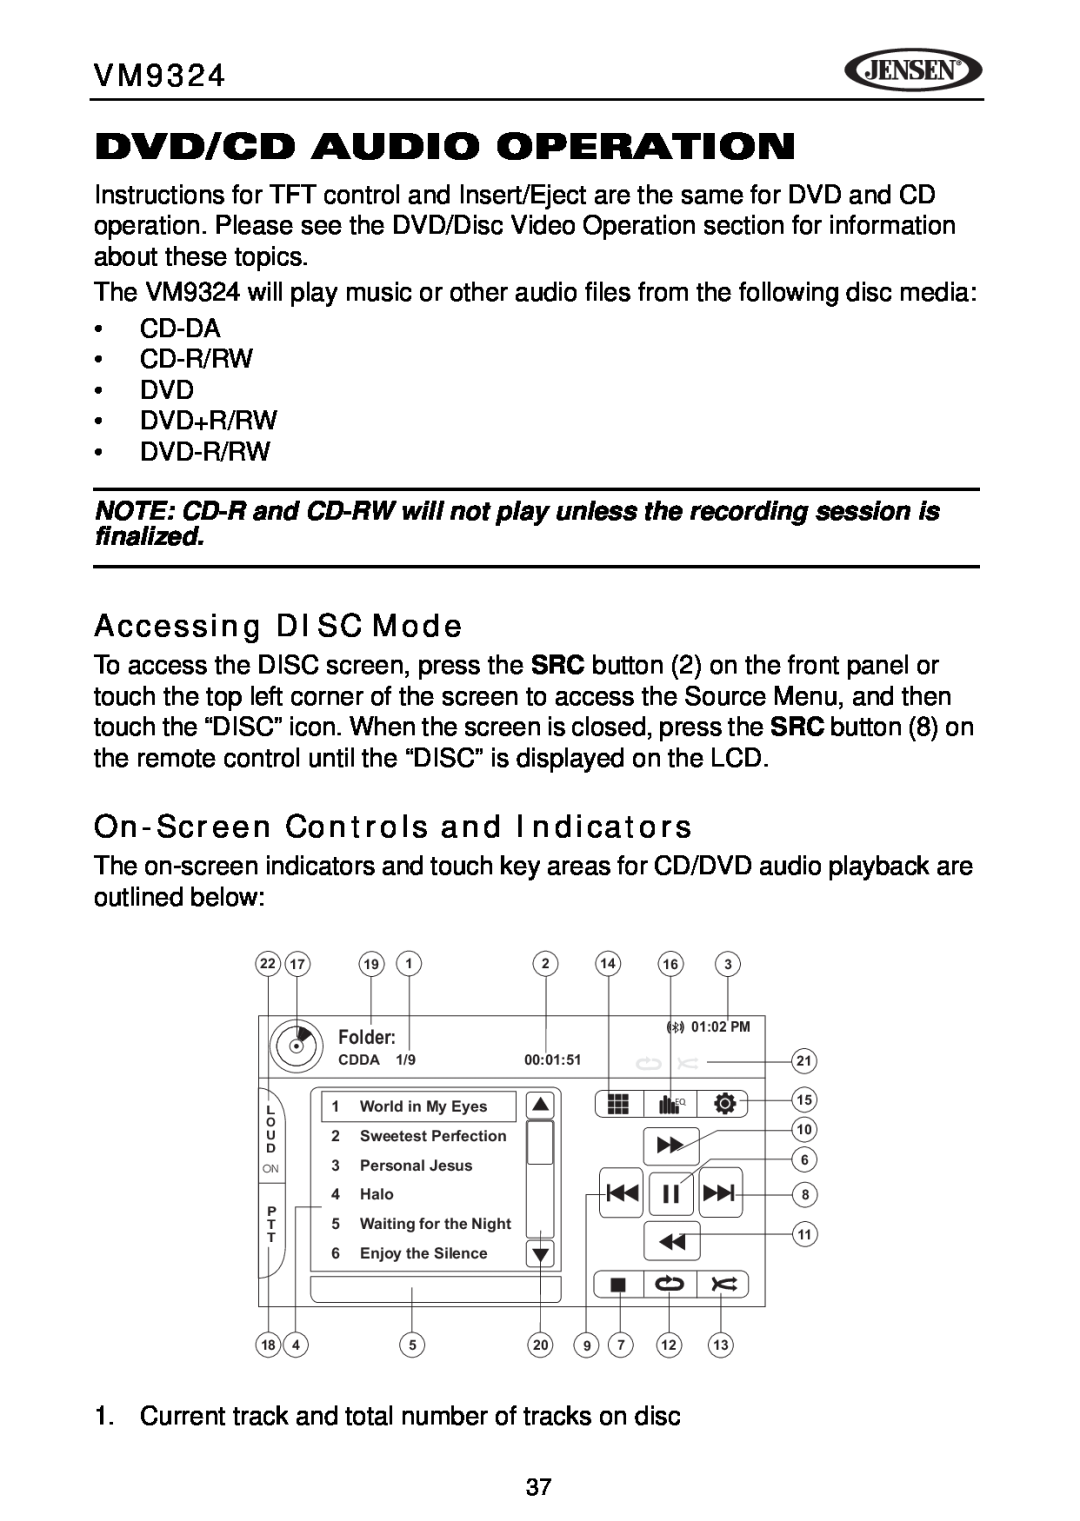 Jensen VM9324 manual Dvd/Cd Audio Operation, Accessing DISC Mode, On-ScreenControls and Indicators 